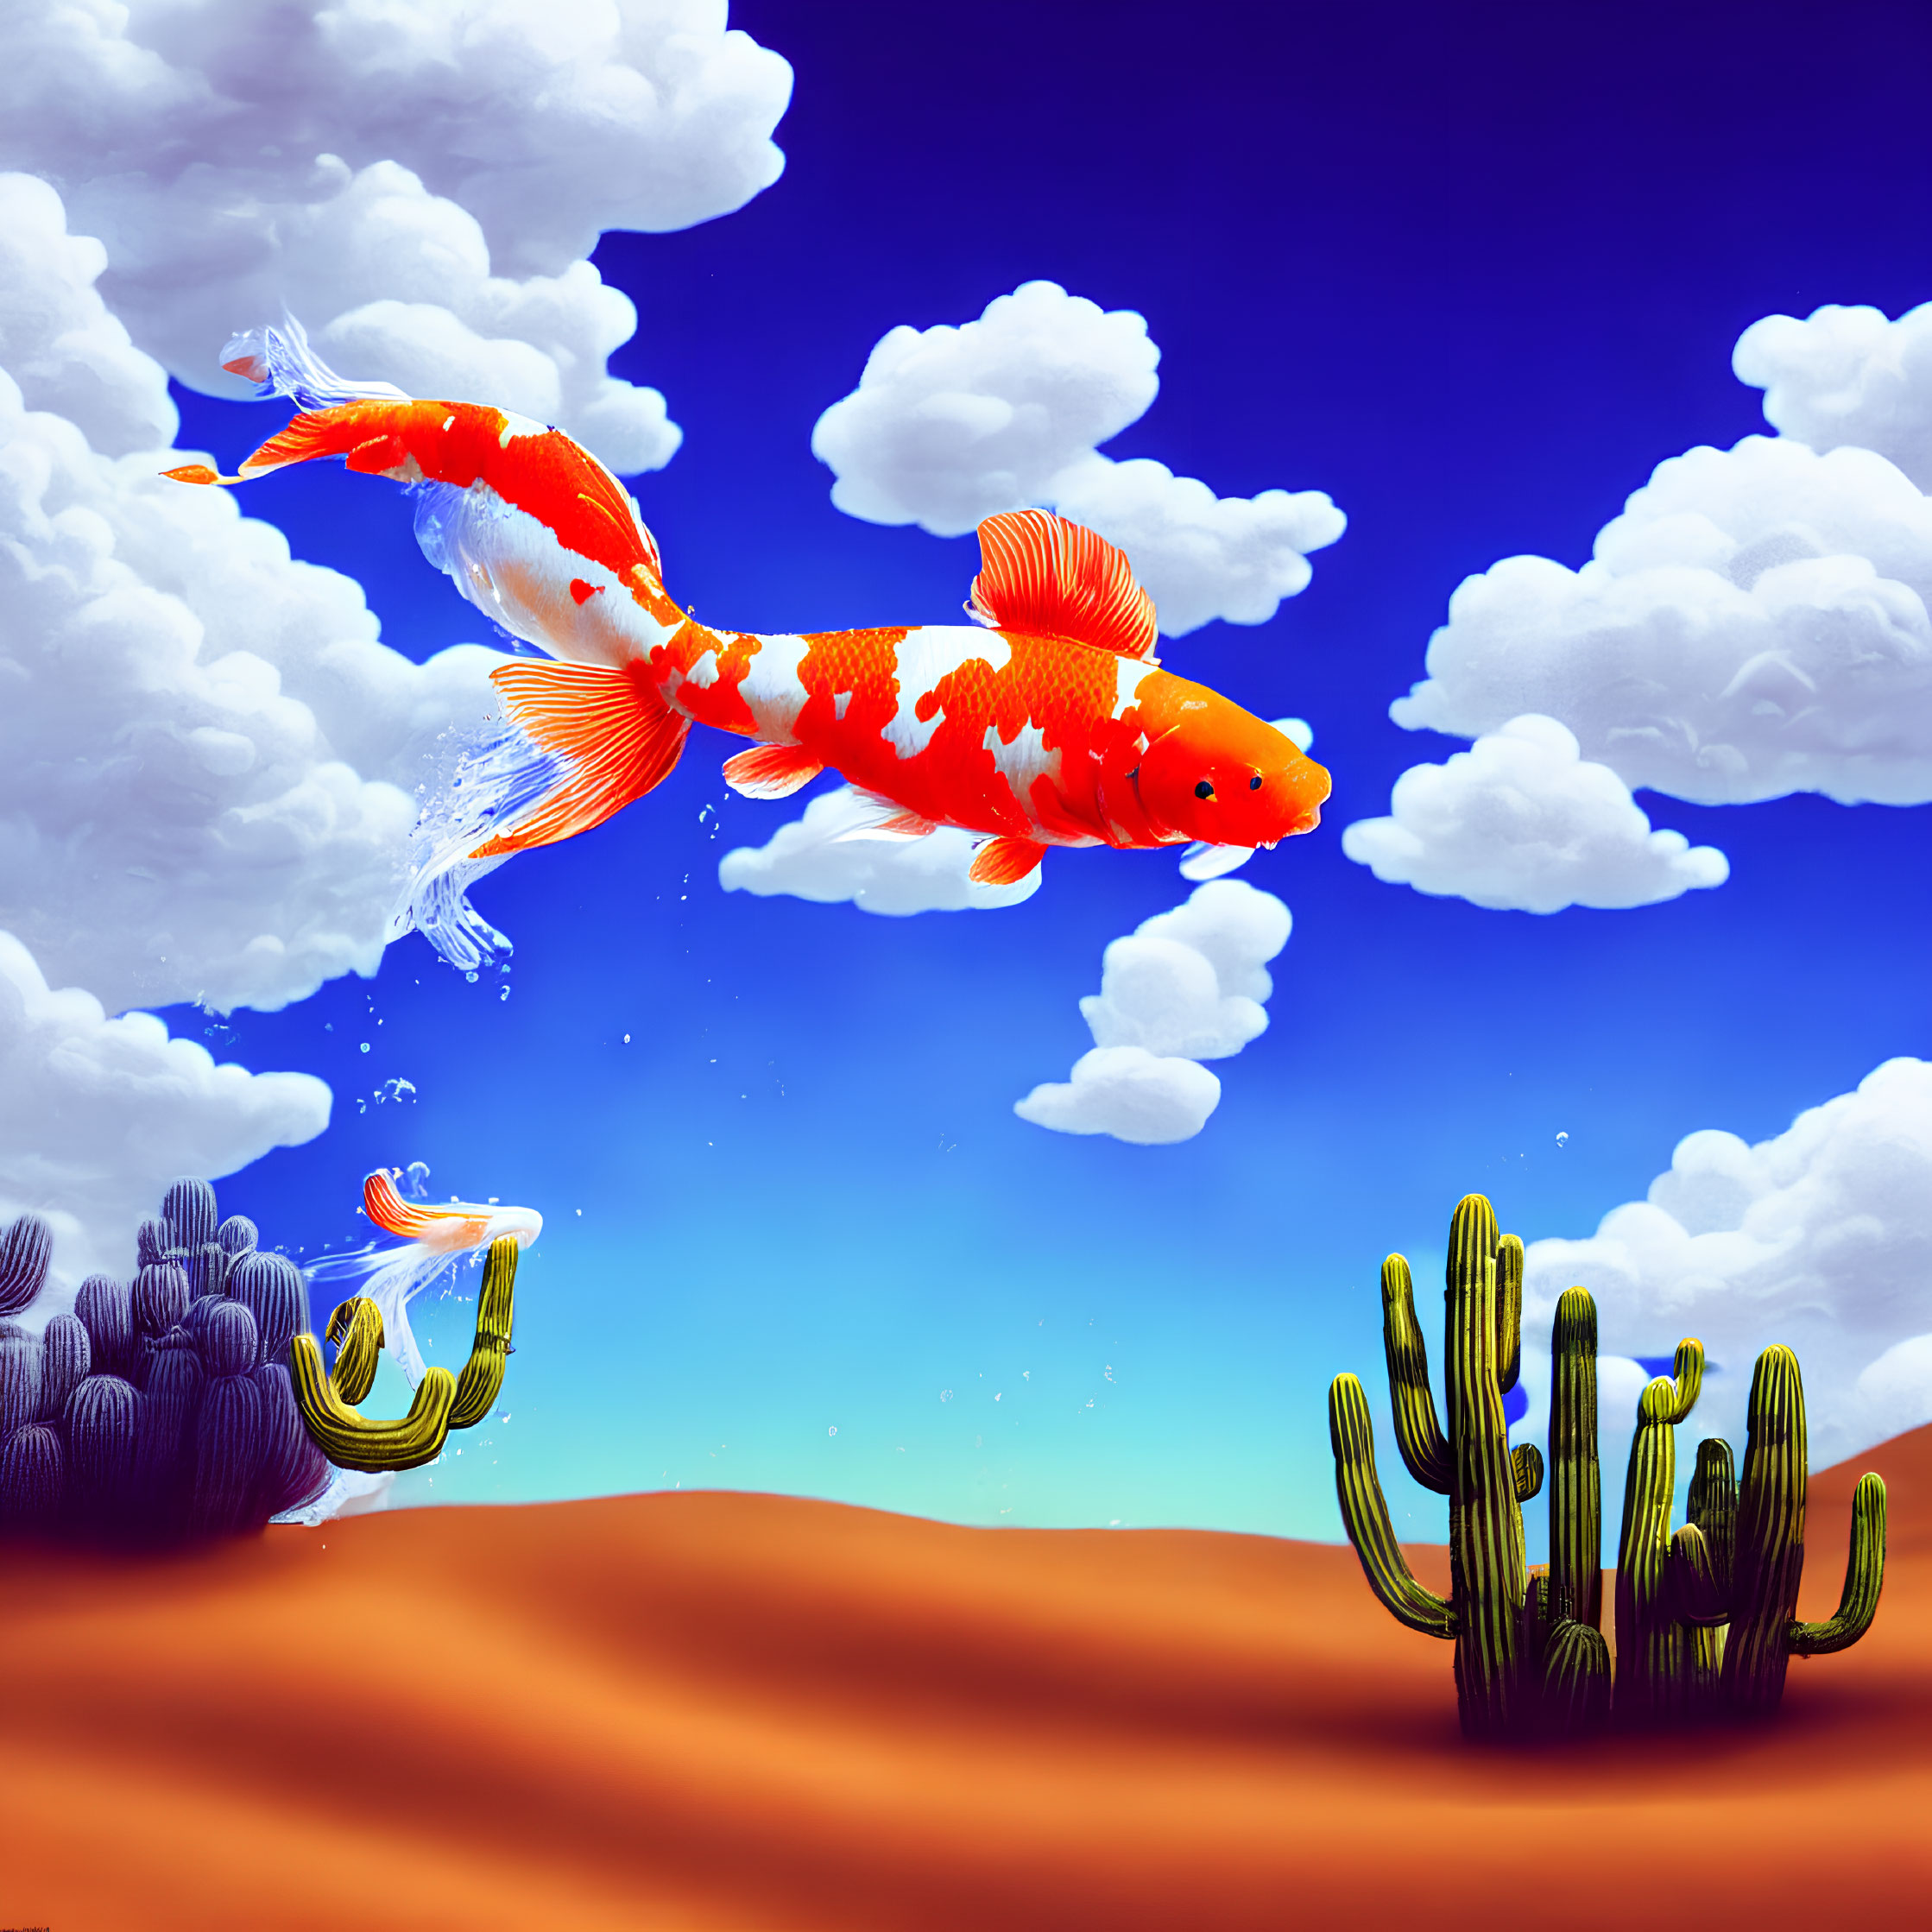 Colorful digital art: goldfish in sky over desert with cacti & horseshoe,